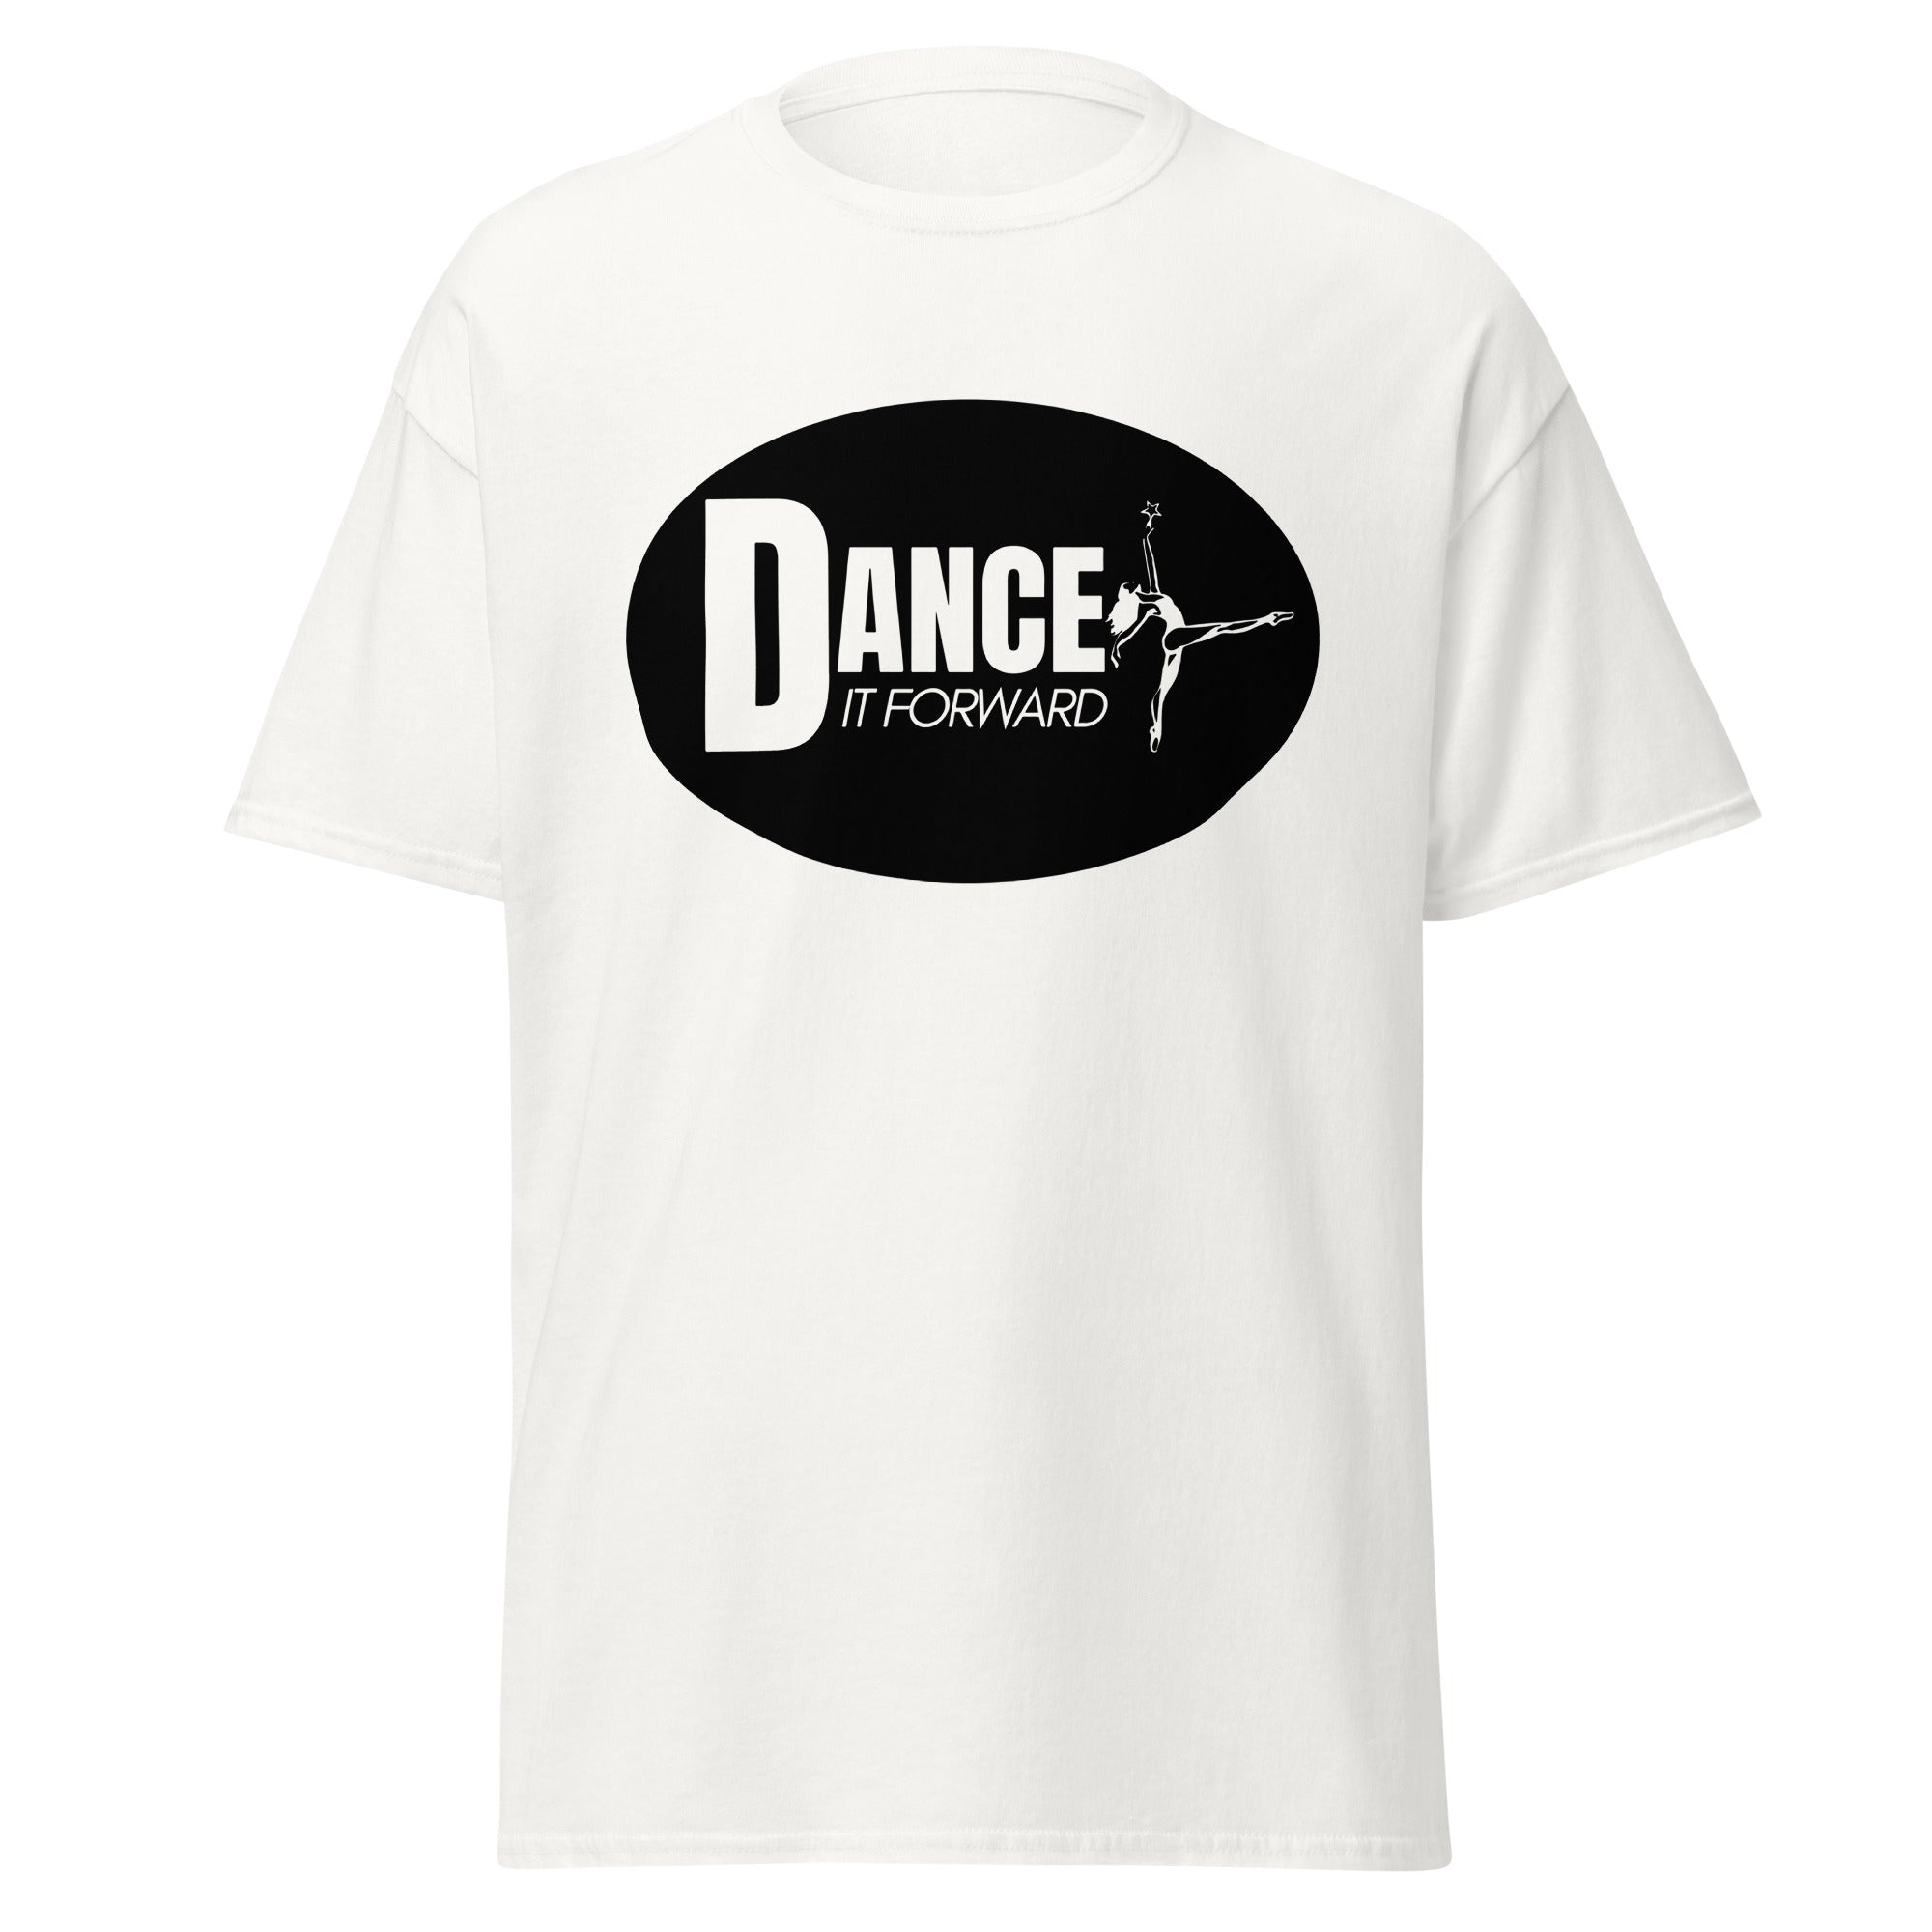 DIF/GYD Men's classic tee (Dance it Forward)